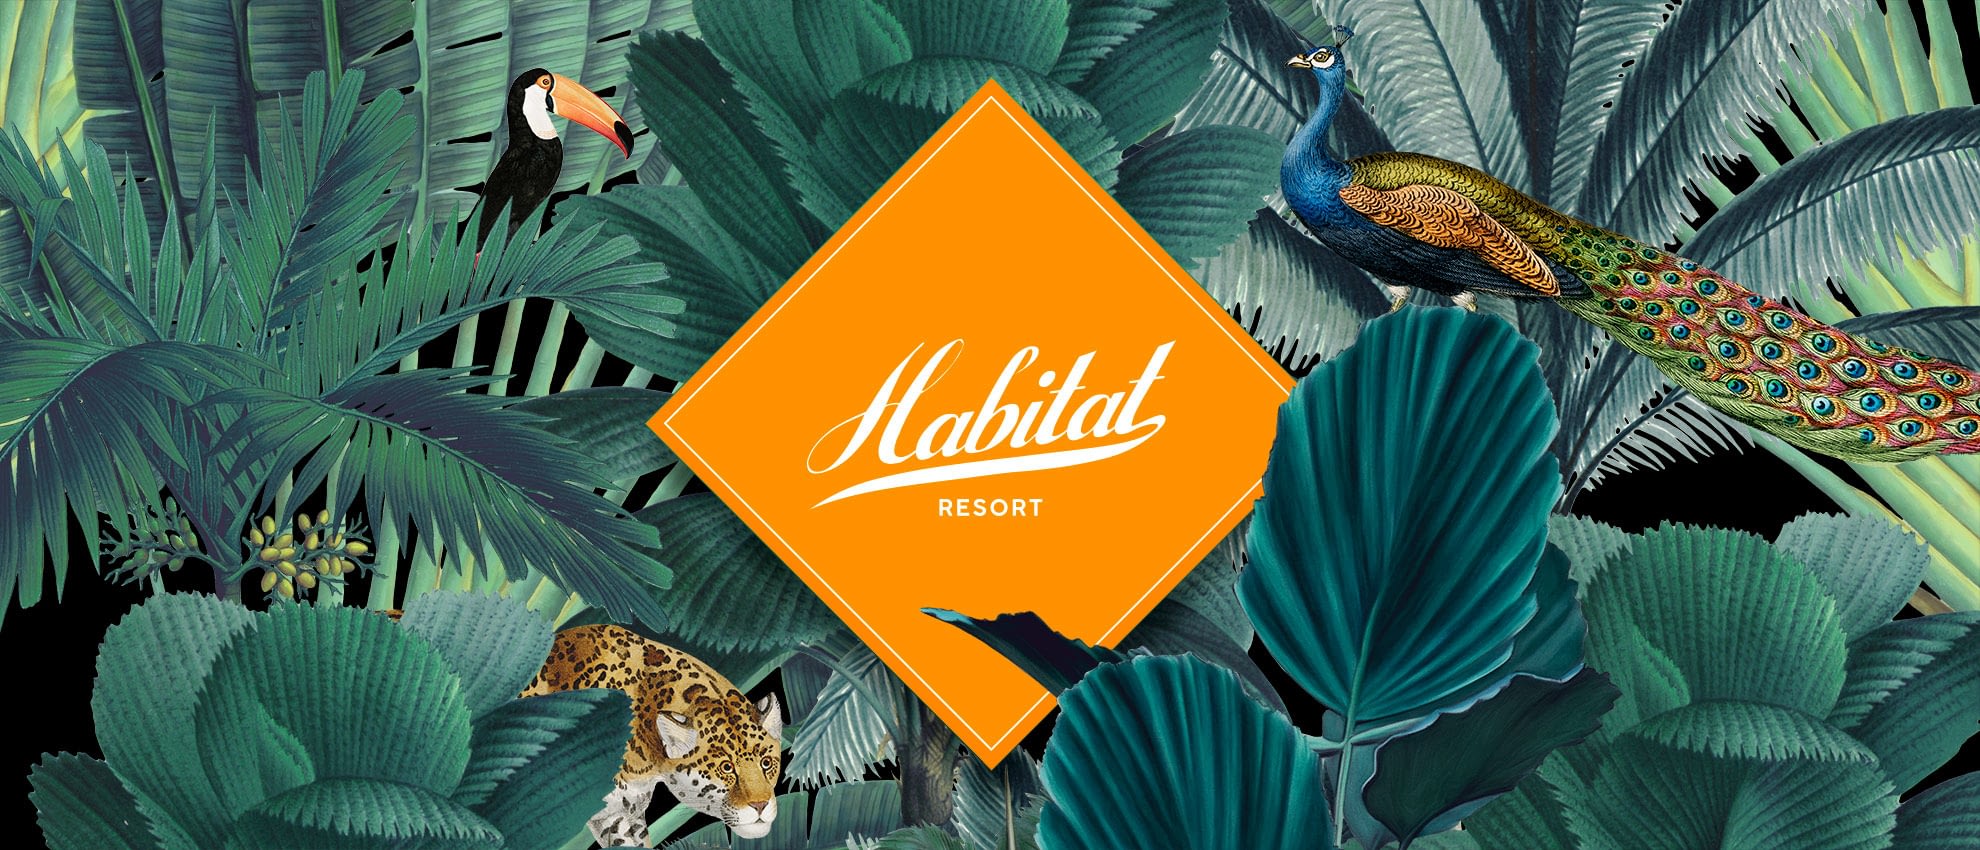 Habitat Resort campagna advertising